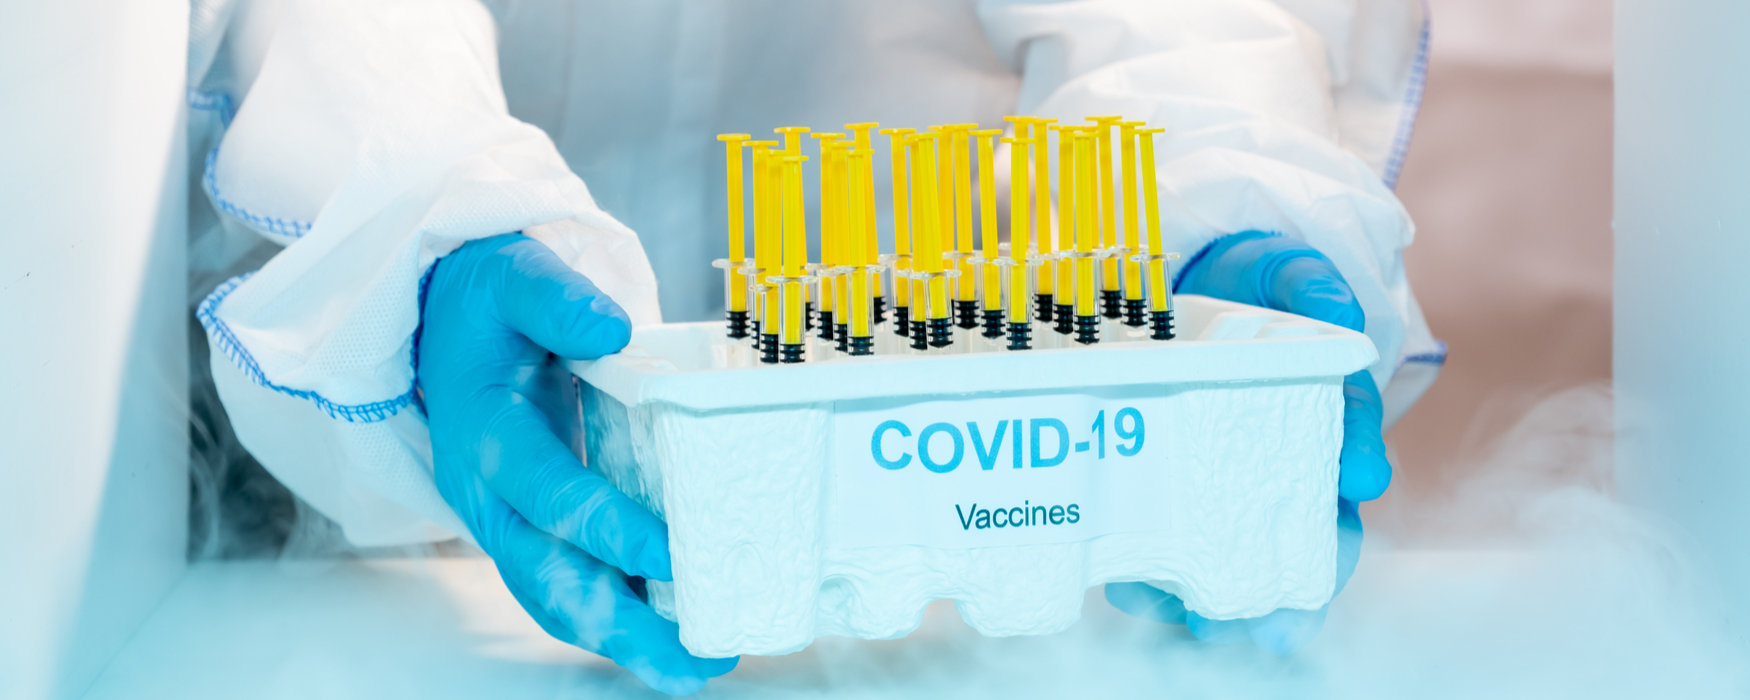 Texas covid vaccine freezers - covid 19 vaccine freezer - vaccine storage in Texas